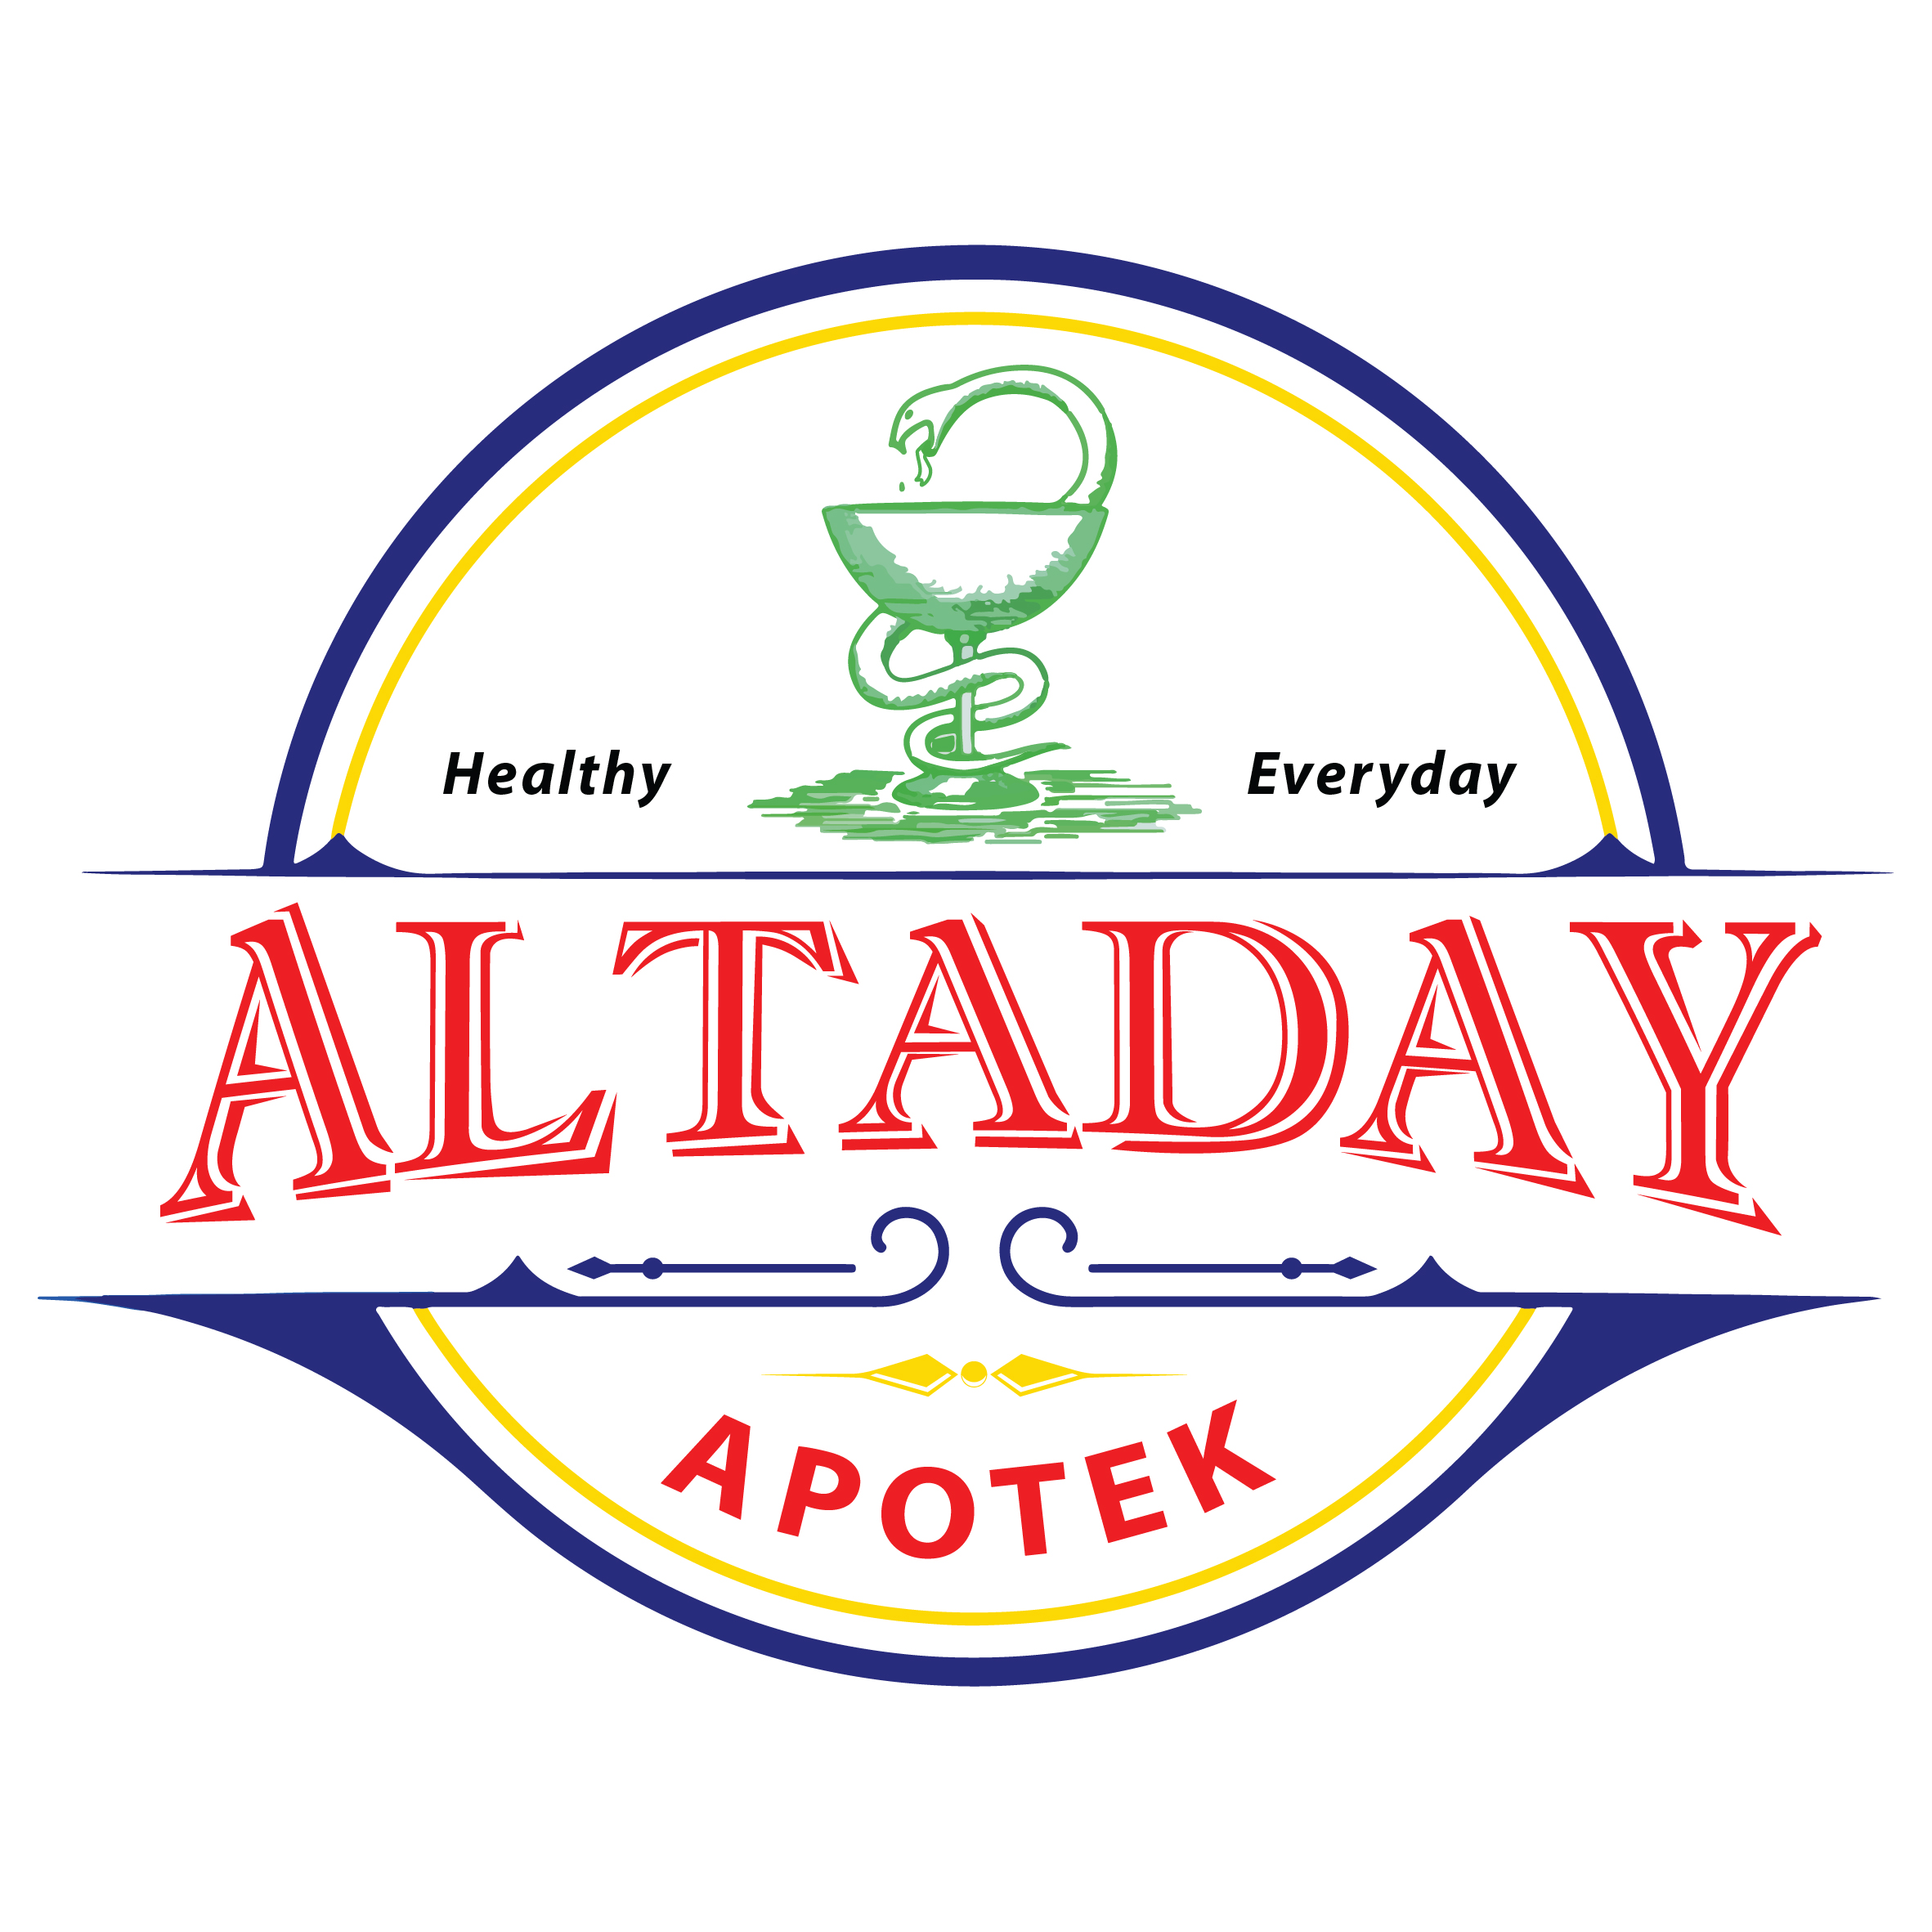 Apotek Altaday